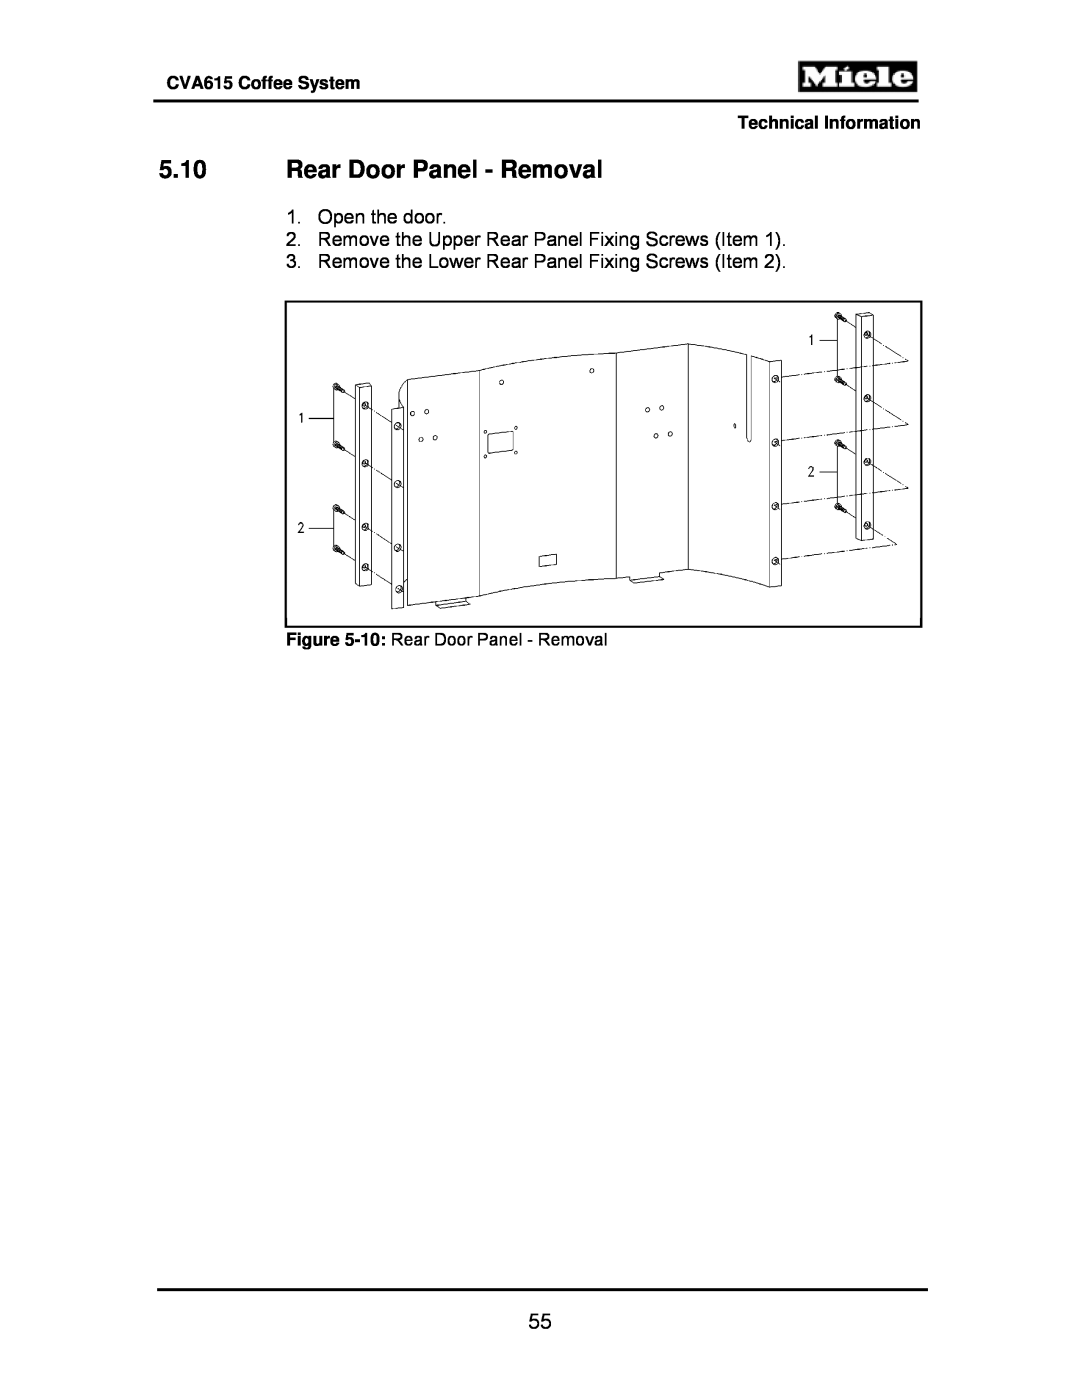 Miele CVA615 manual 5.10Rear Door Panel - Removal, Open the door, Remove the Upper Rear Panel Fixing Screws Item 